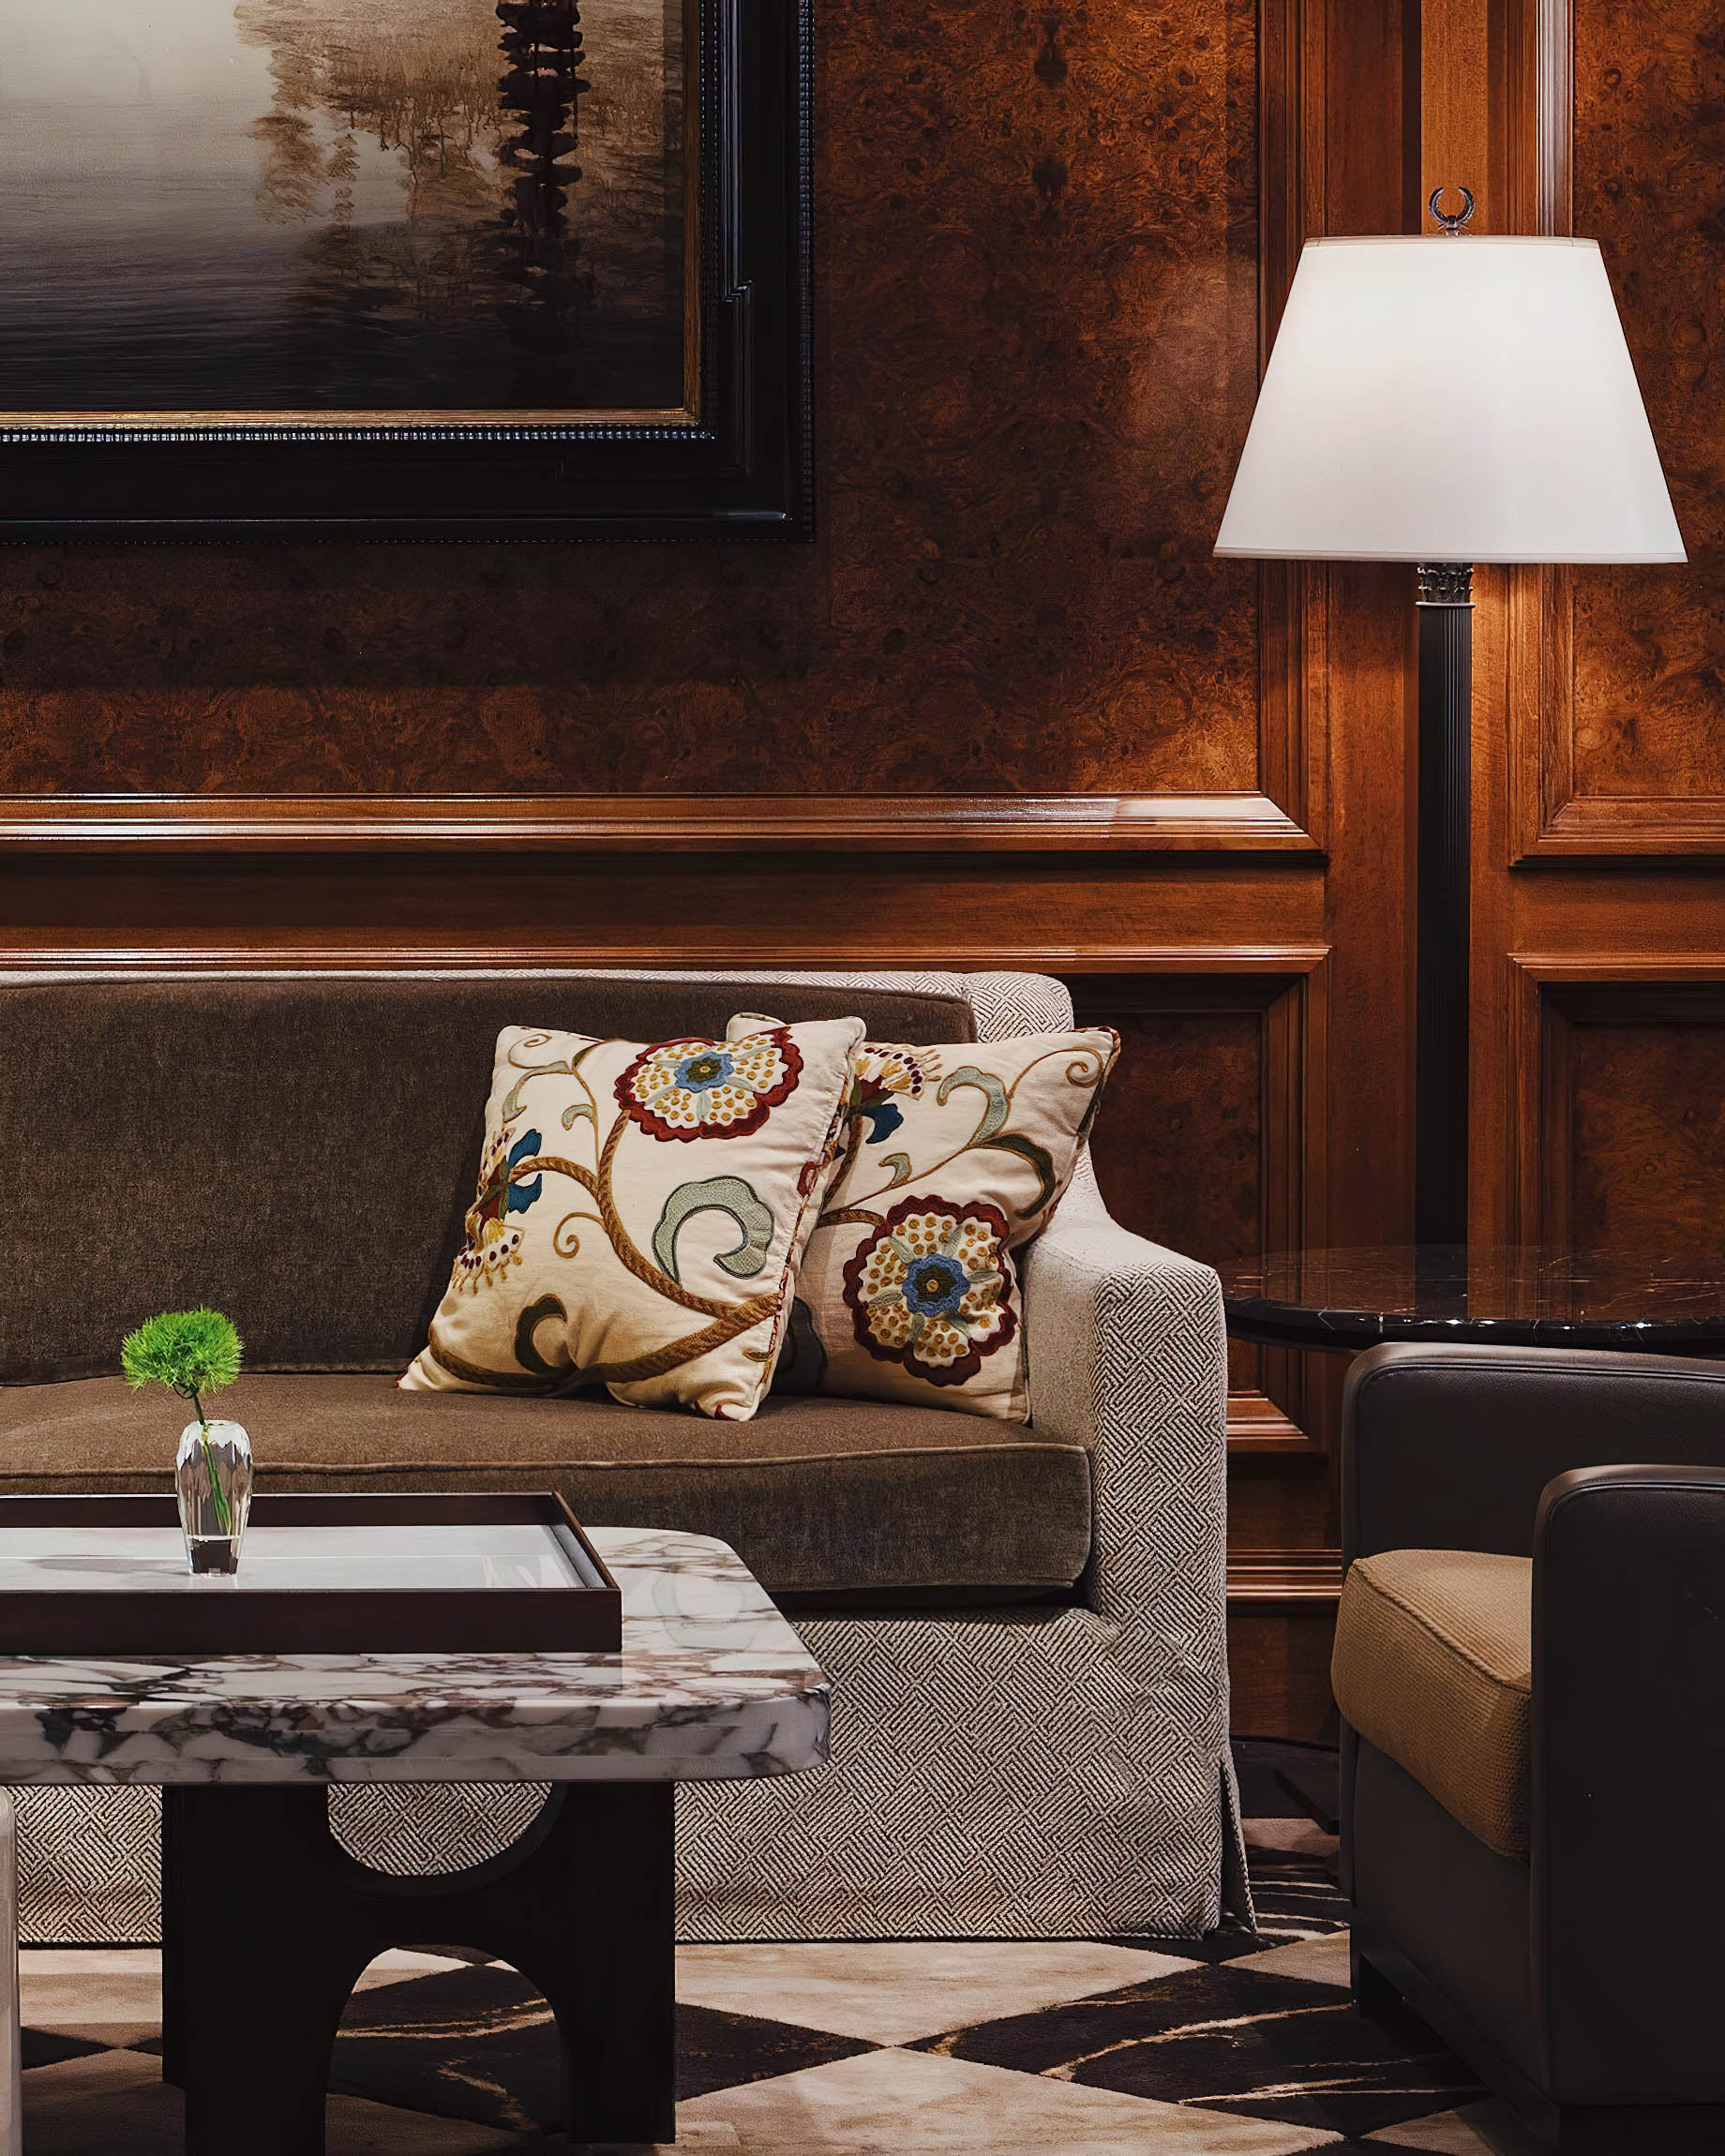 The Ritz-Carlton New York, Central Park Hotel – New York, NY, USA – Interior Design Details